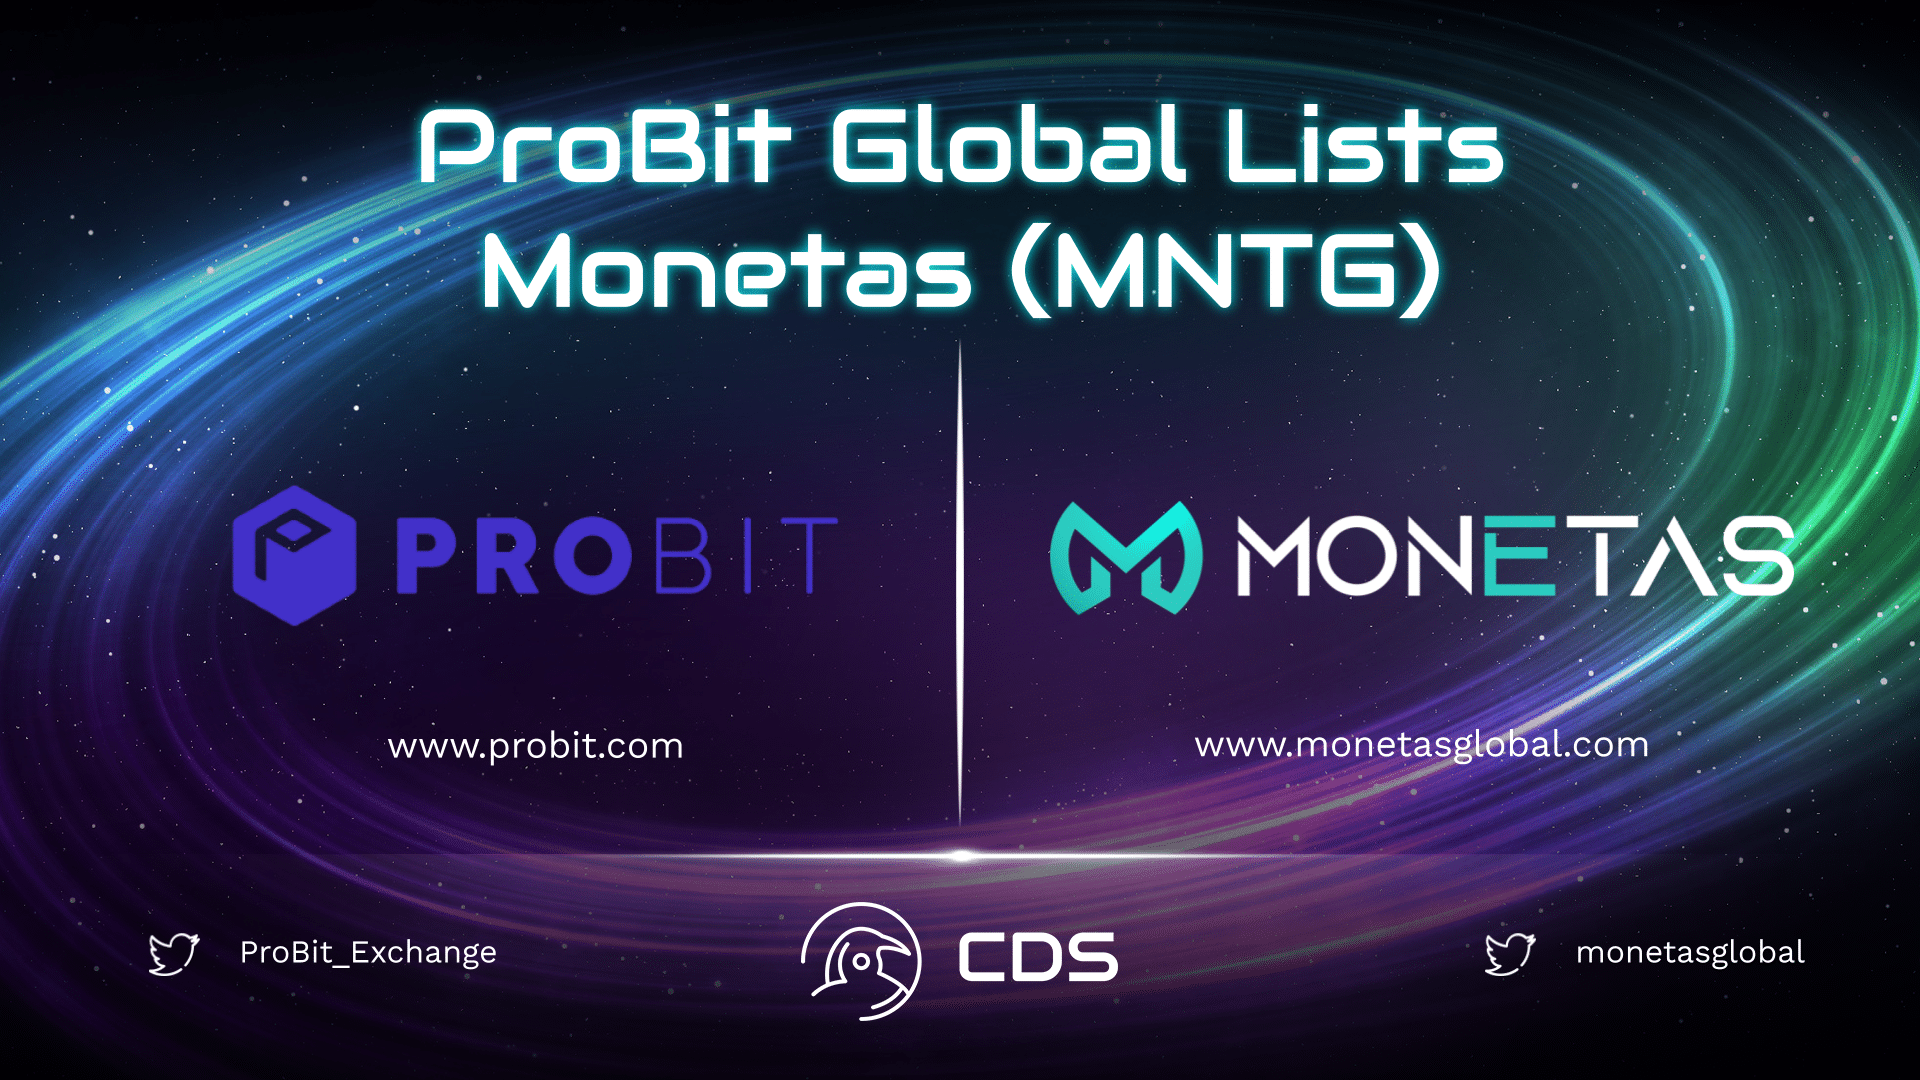 ProBit Global Lists Monetas (MNTG)